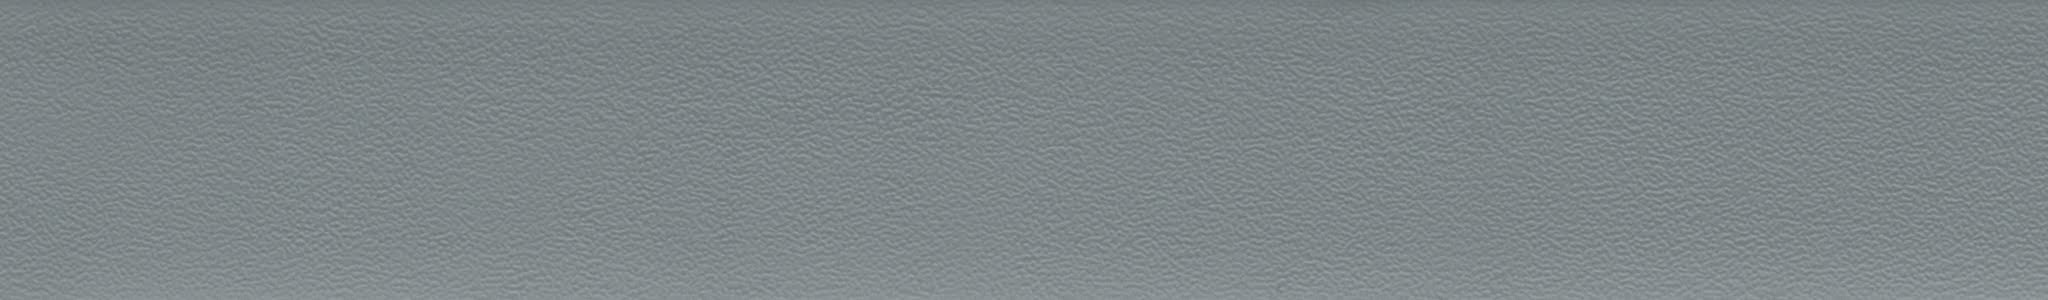 ABS 0162 PE Graphite Grey 42x1mm HU 172162